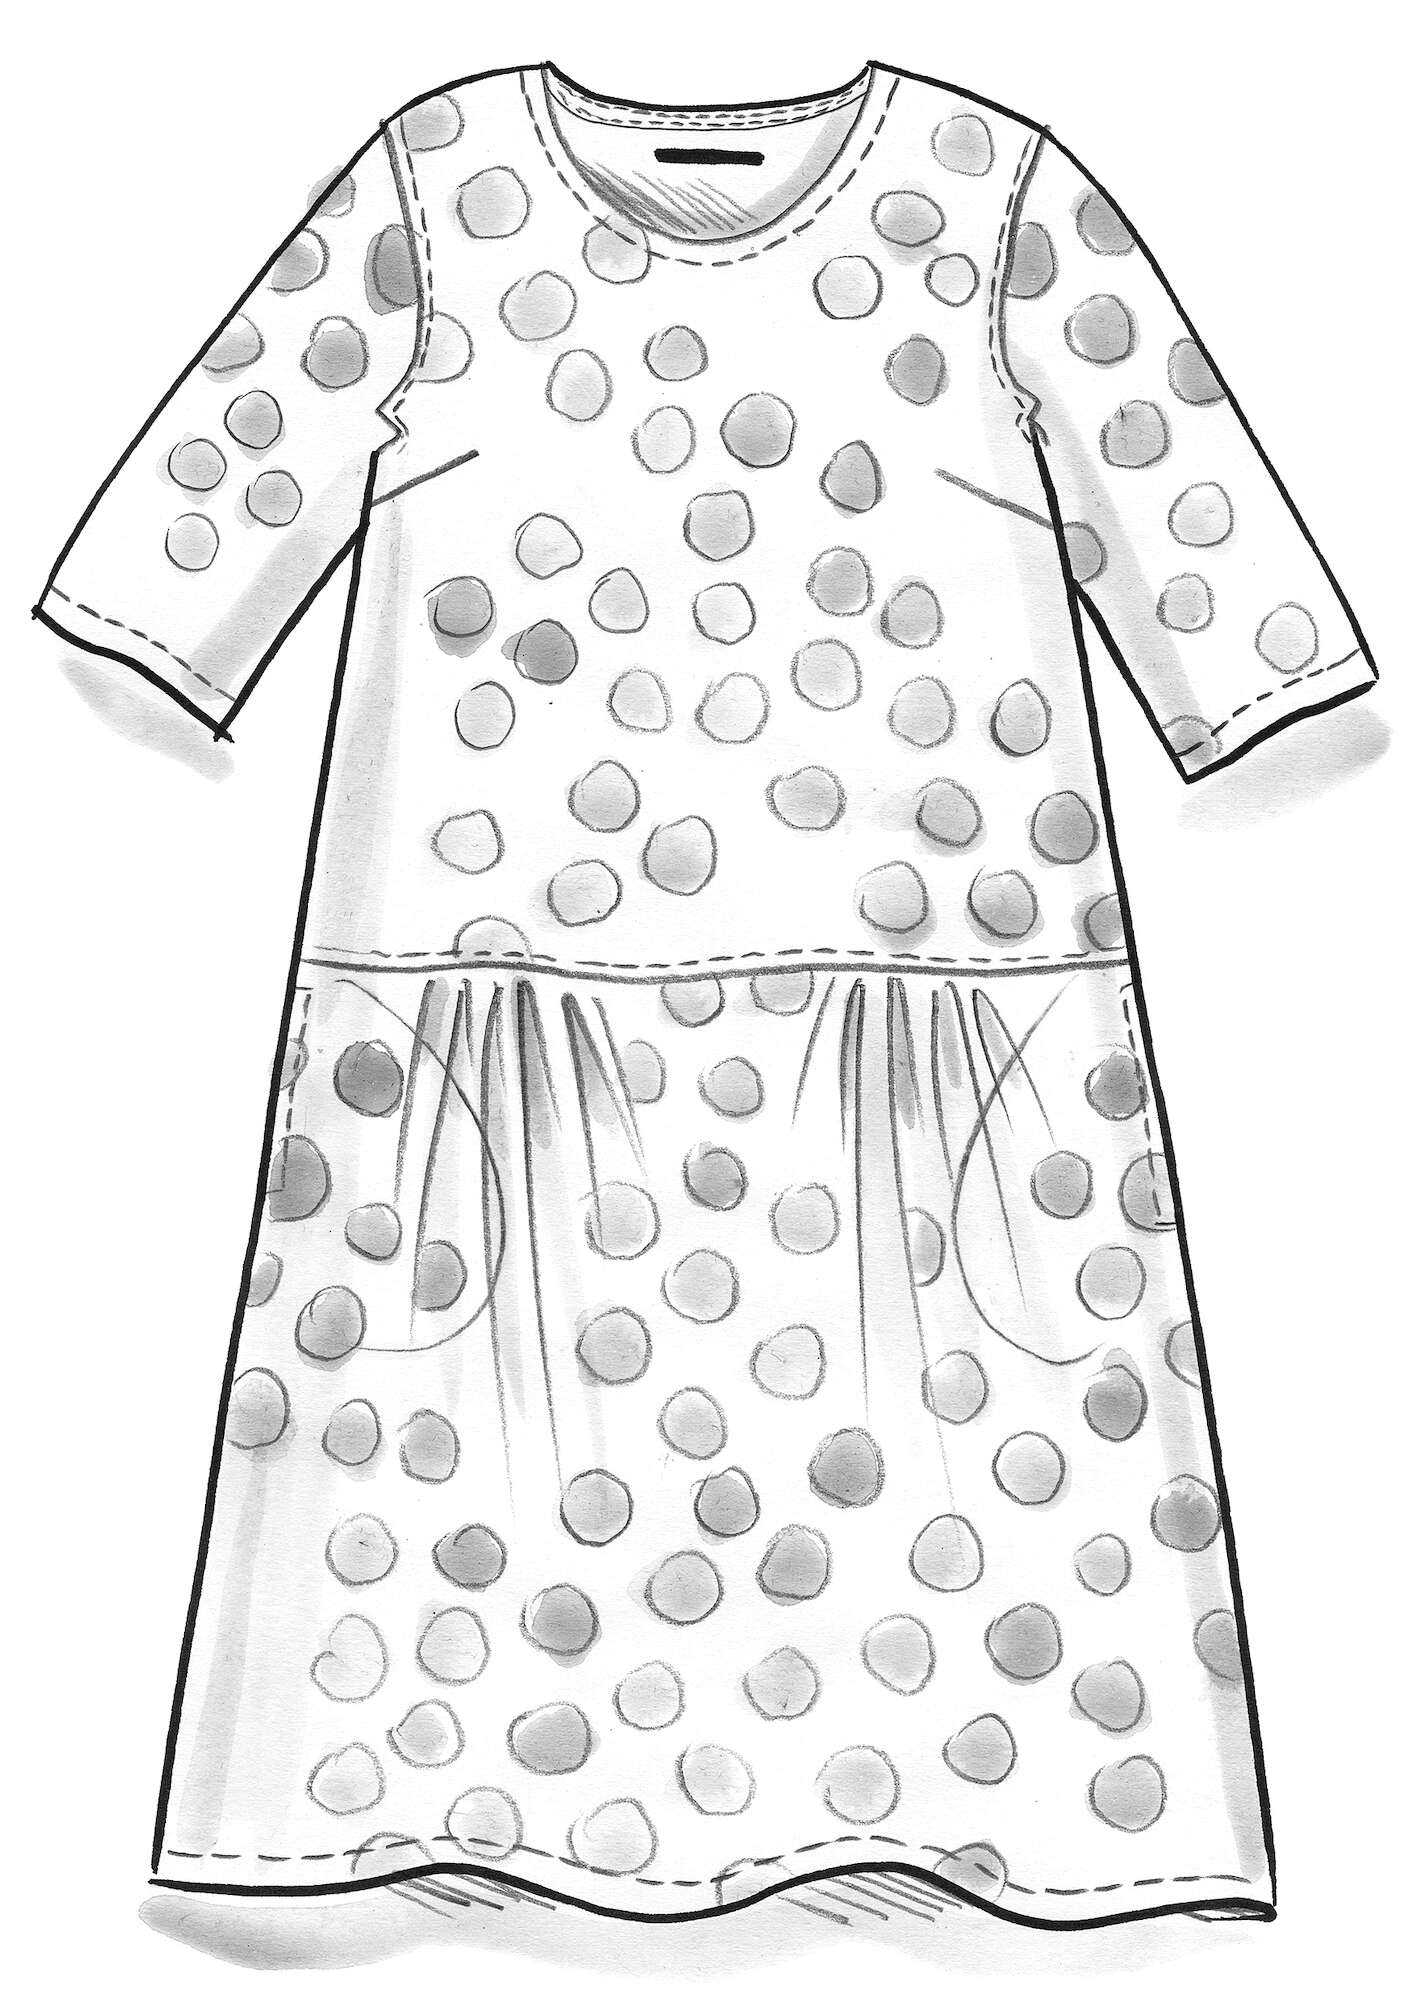 Vevd kjole «Yayoi» i økologisk bomull